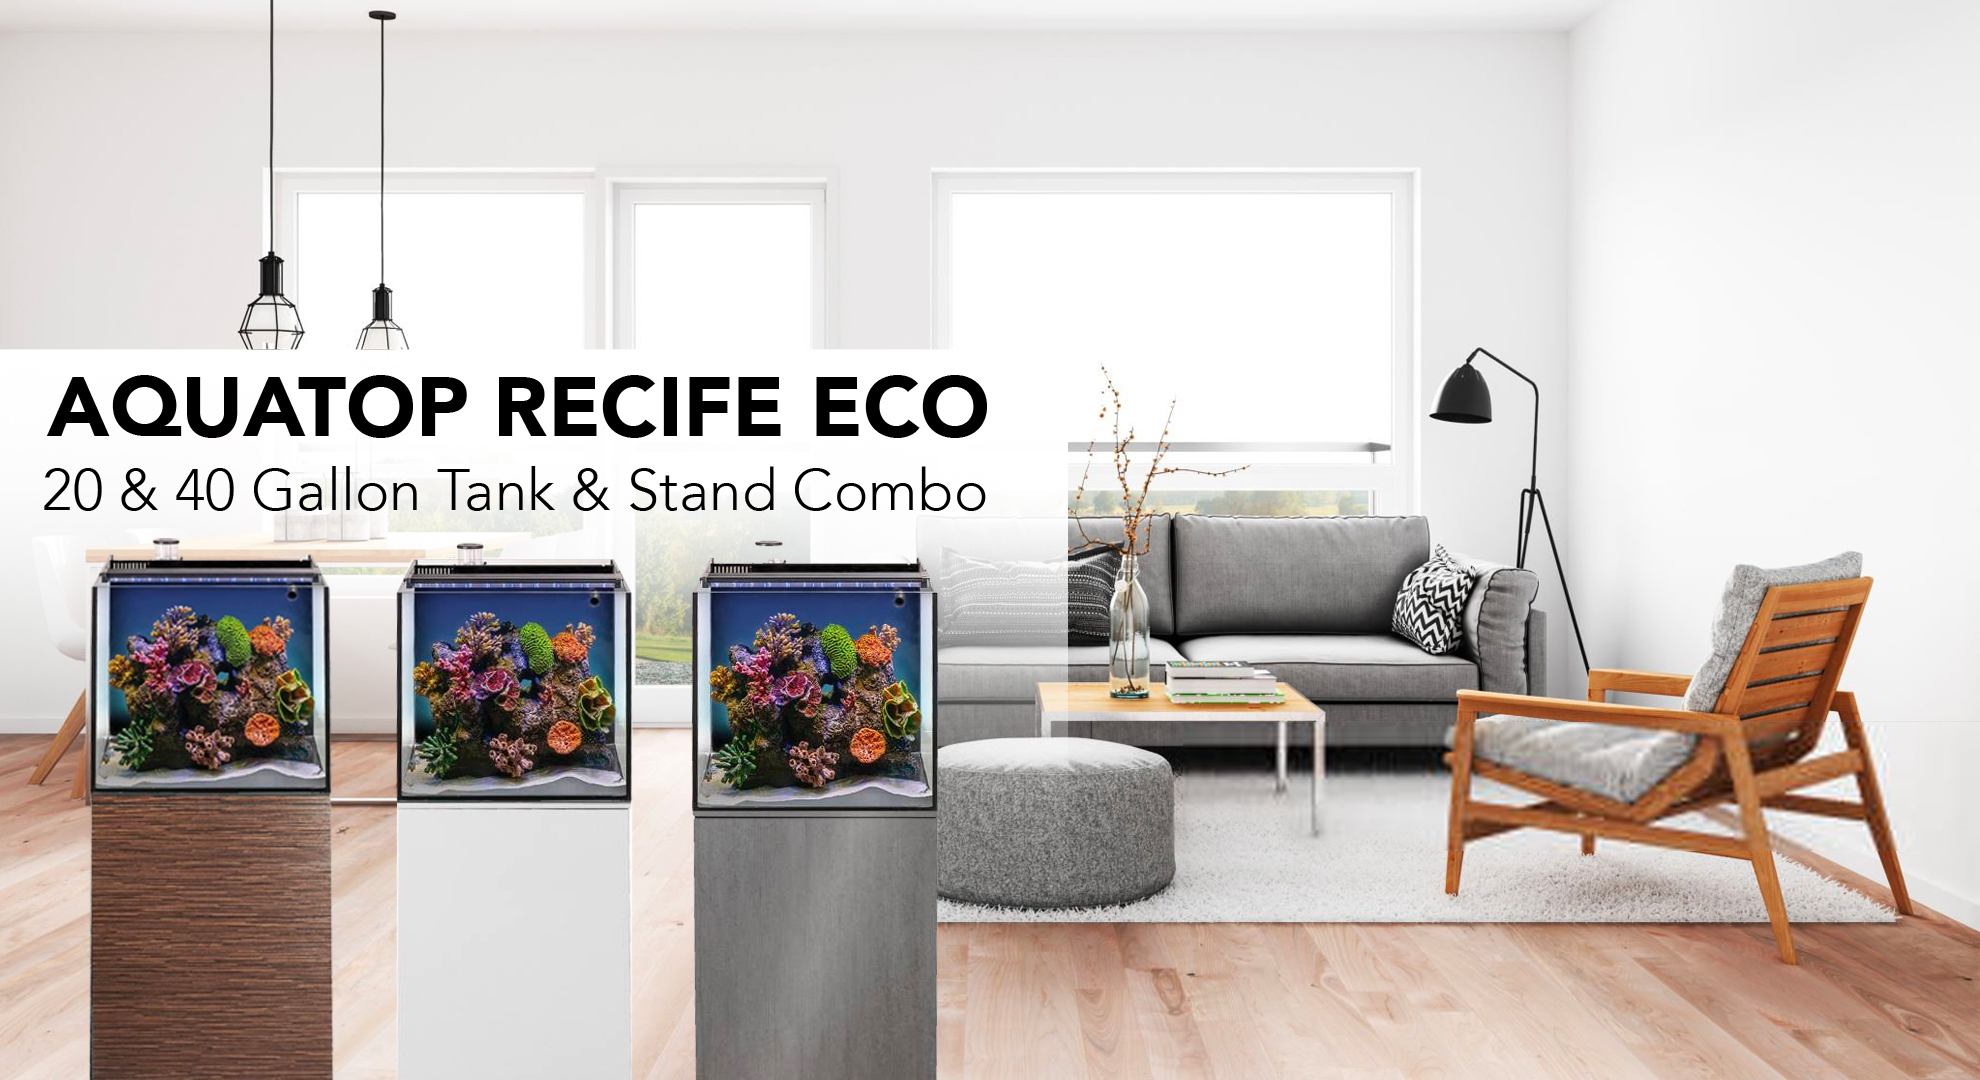 Create the Perfect Home Aquarium with AQUATOP’s Recife ECO Kits!